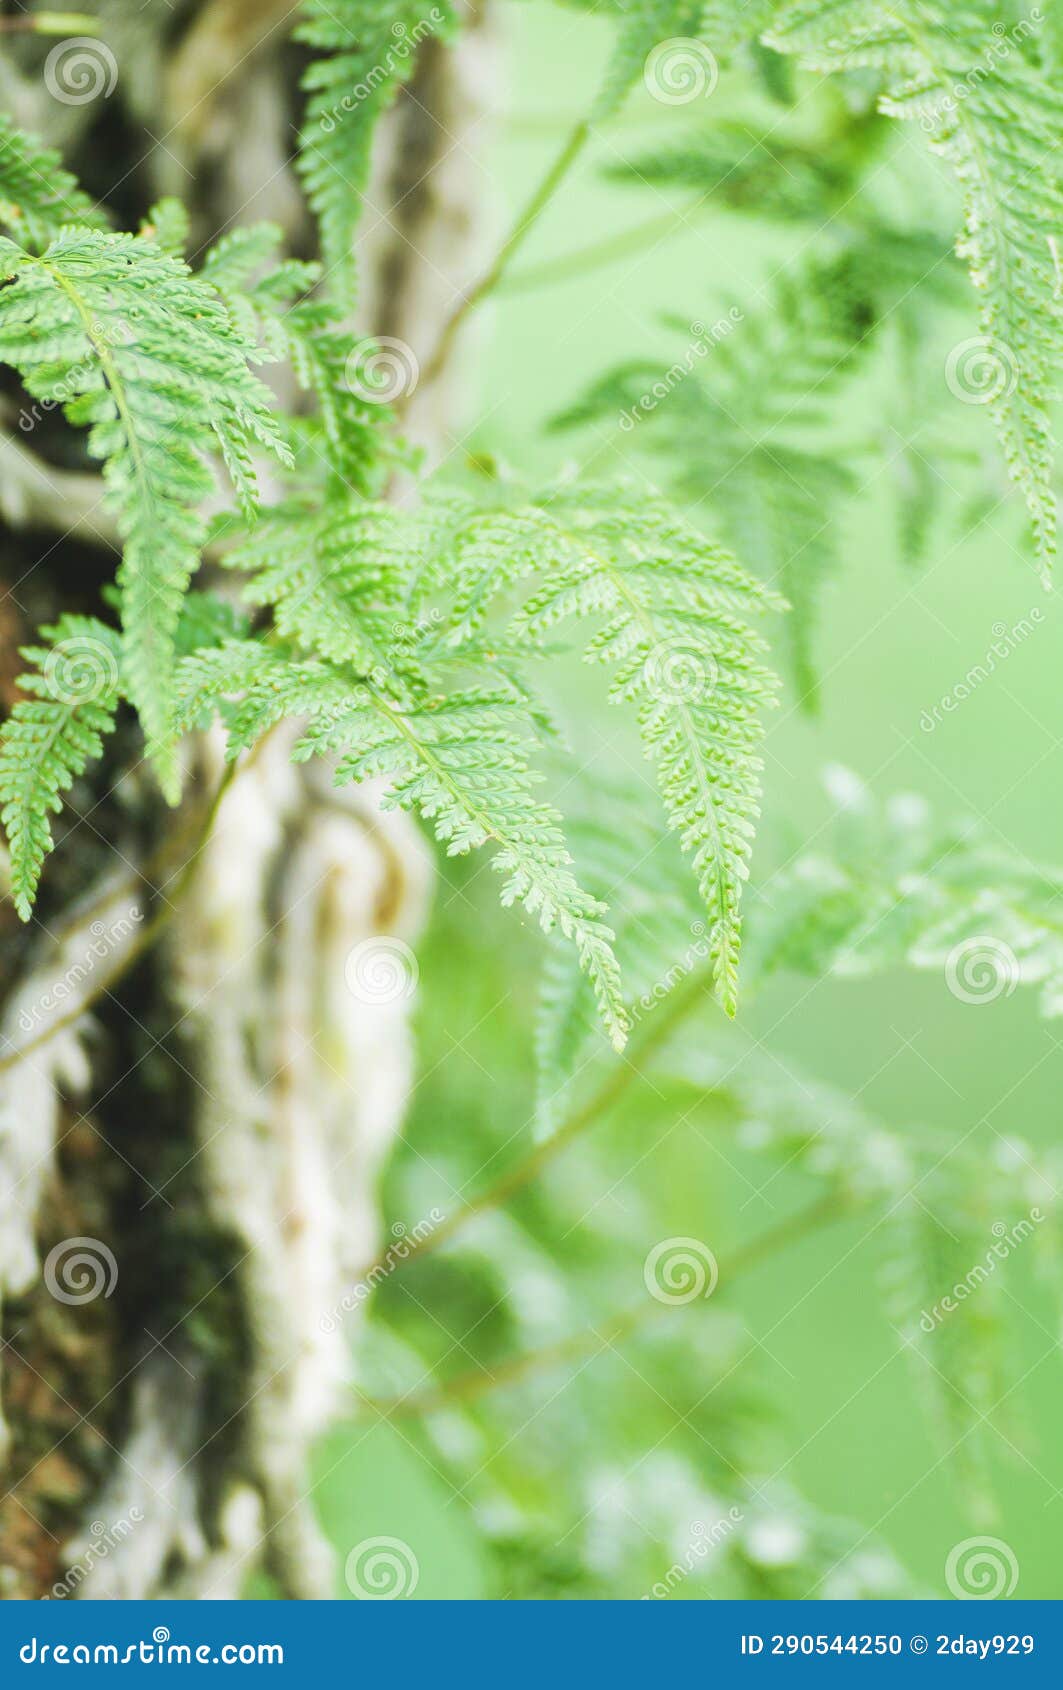 davallia mariesii, squirrel's foot fern in nature, green, forest